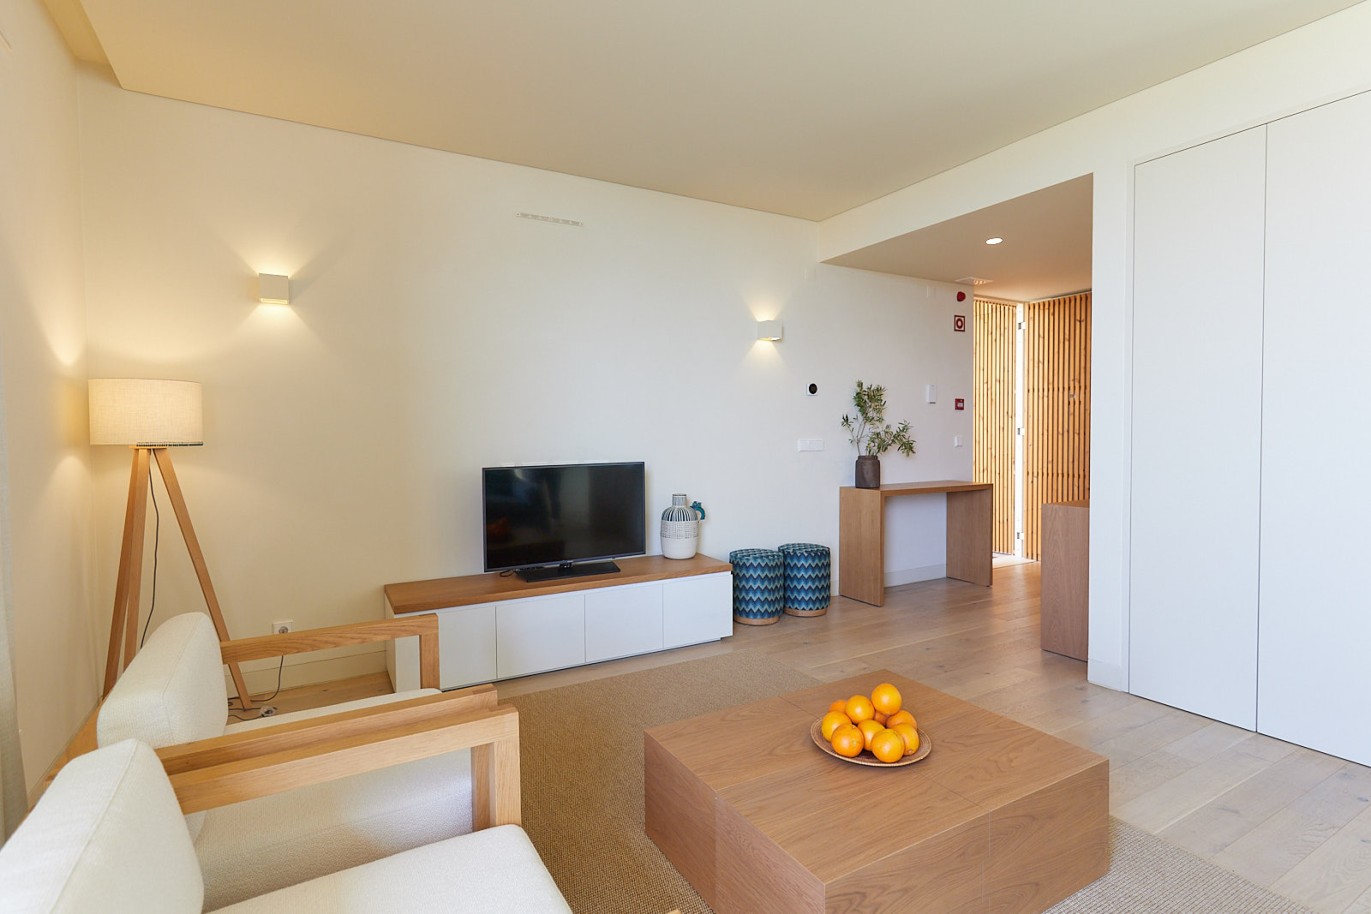 2 bedroom apartment in resort, for sale in Porches, Algarve_230684